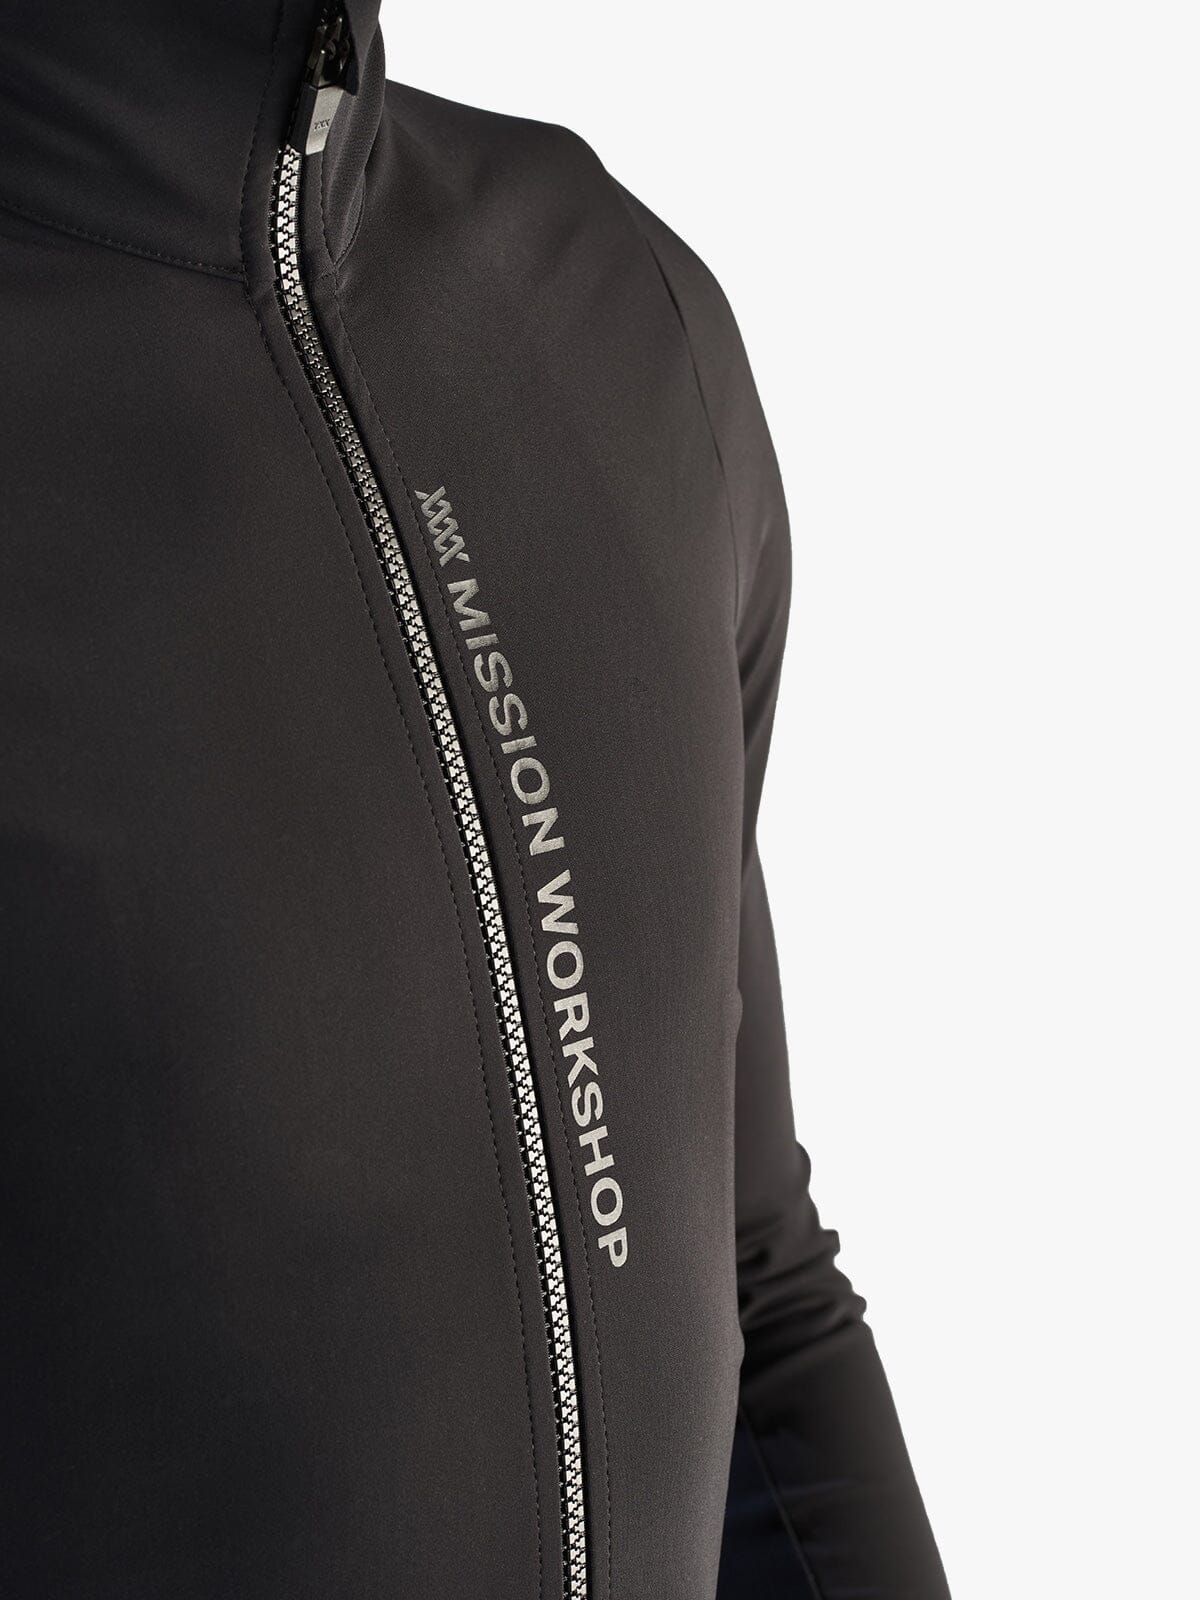 Range Jacket Men's by Mission Workshop - Weatherproof Bags & Technical Apparel - San Francisco & Los Angeles - Built to endure - Guaranteed forever